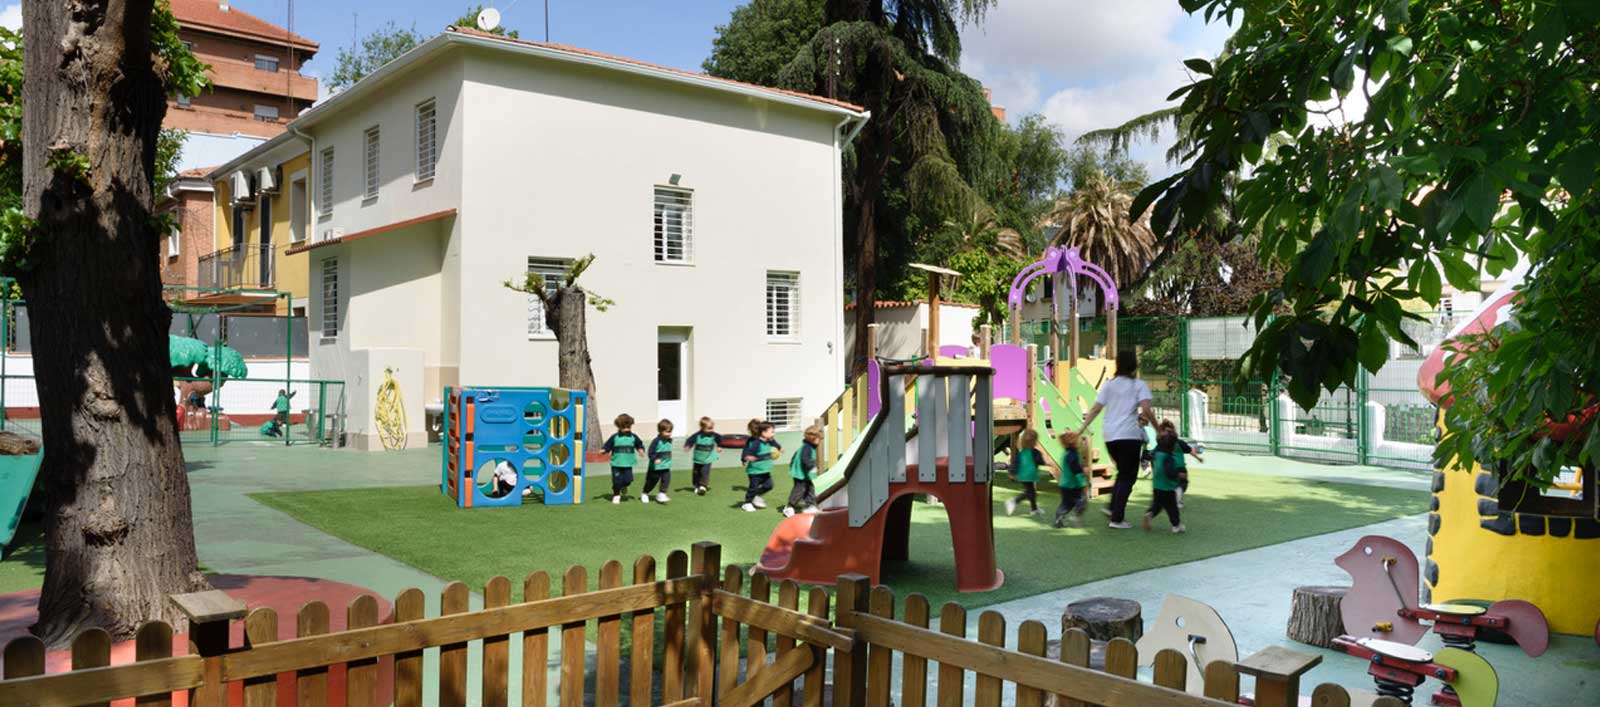 centro infantil para niños